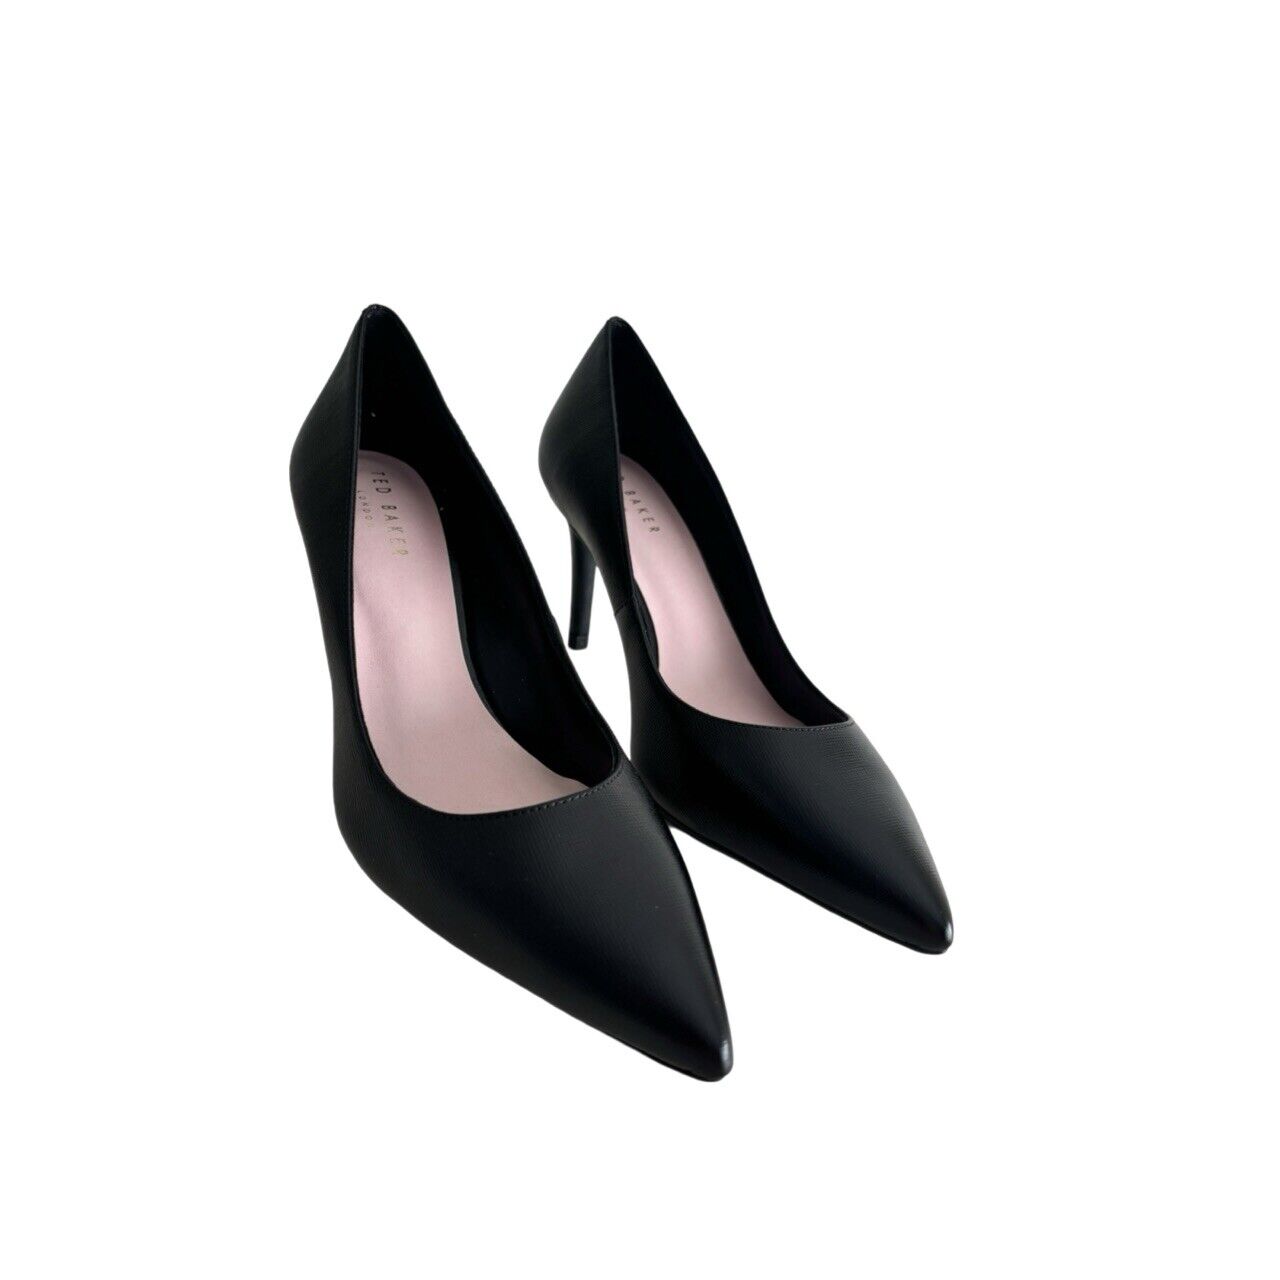 Ted Baker AlYSSE High Heels Court Black Shoes - RRP £125.00 - Soul and Sense Streetwear